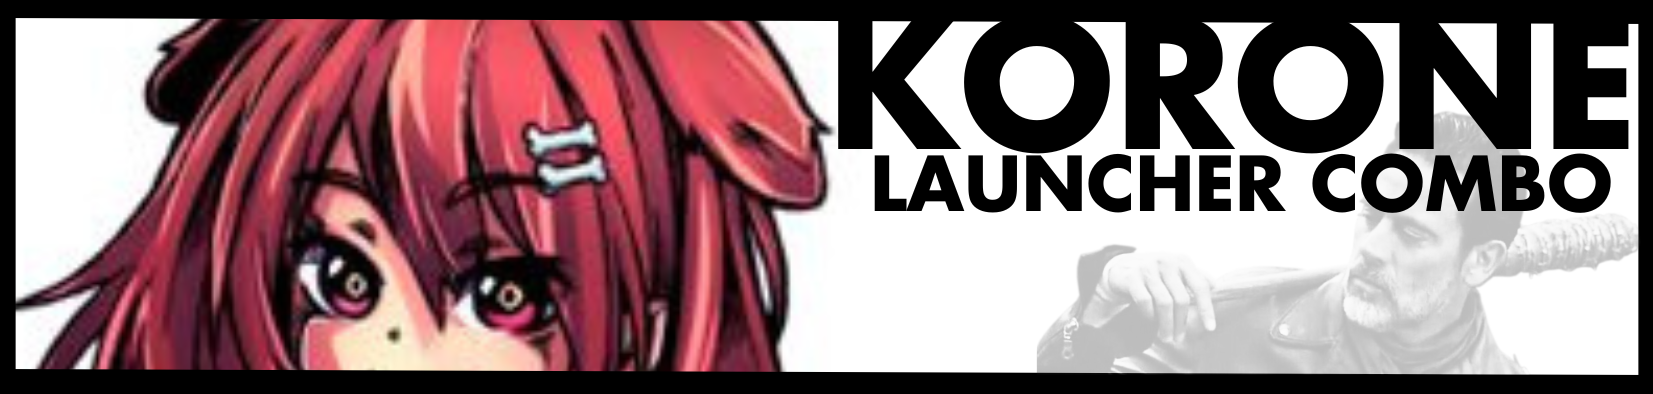 Idol Showdown - Guide for Korone Best Combos - — LAUNCHER COMBO — - E655B82